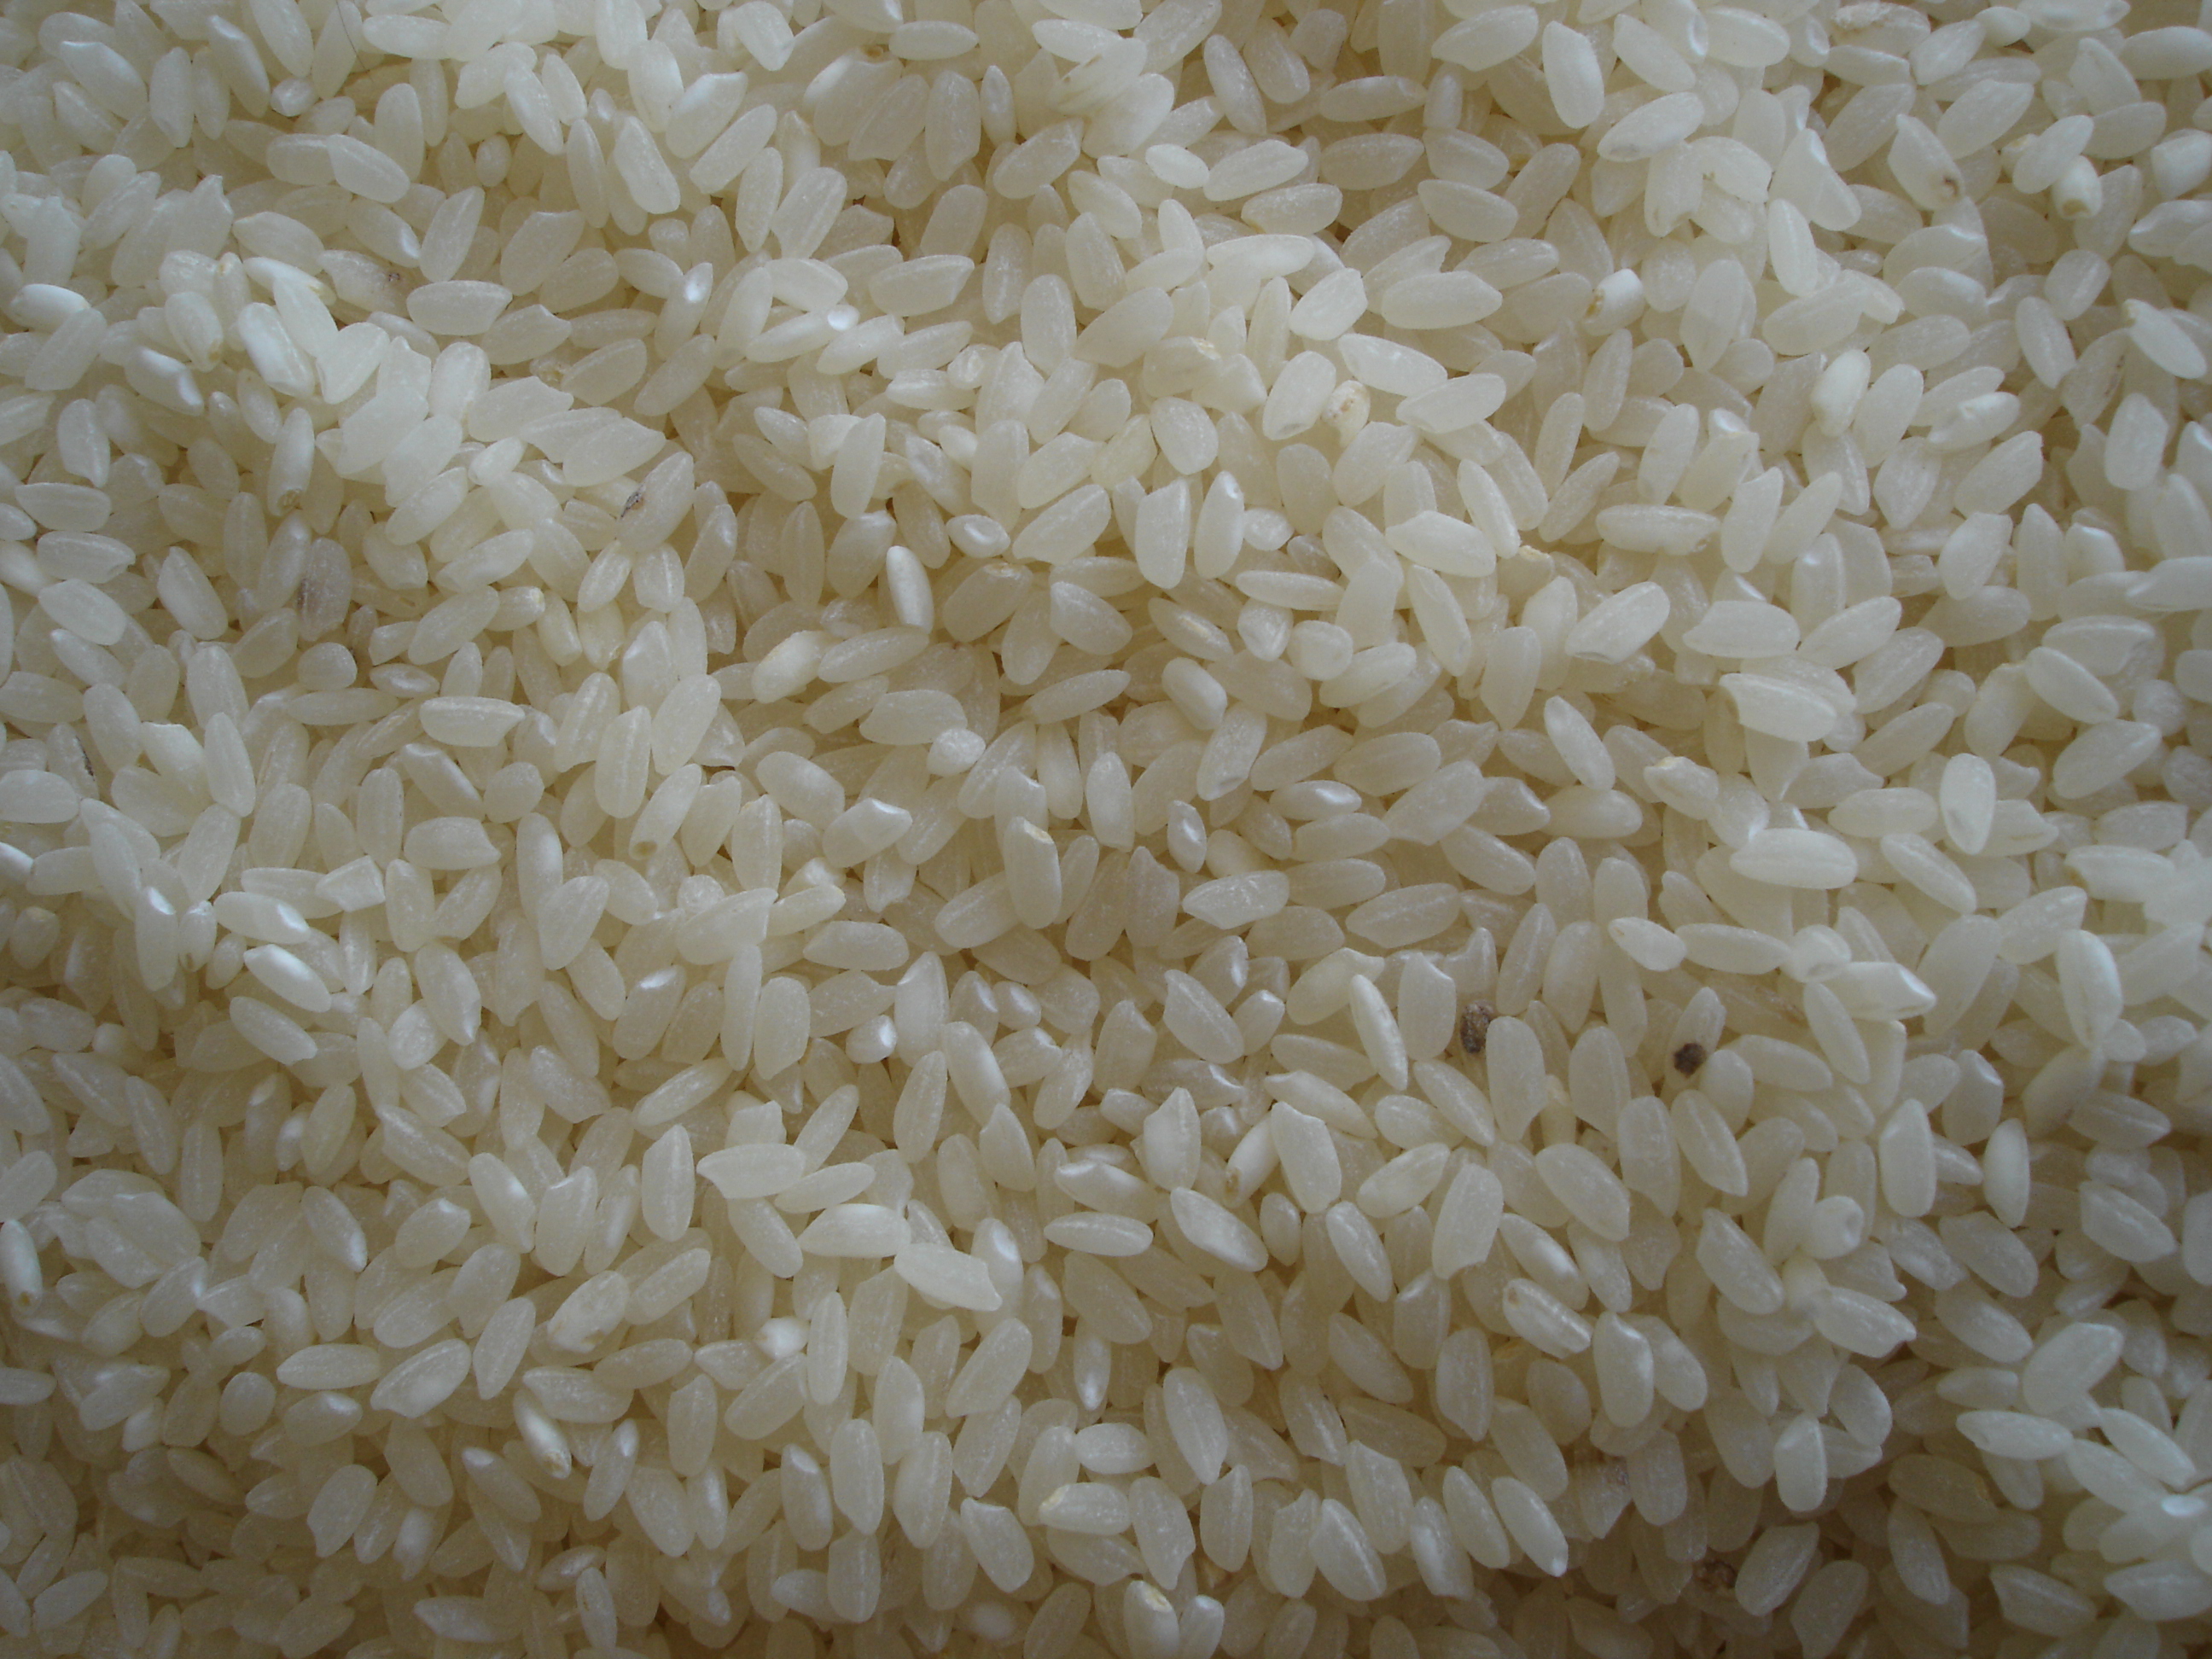 Pals rice